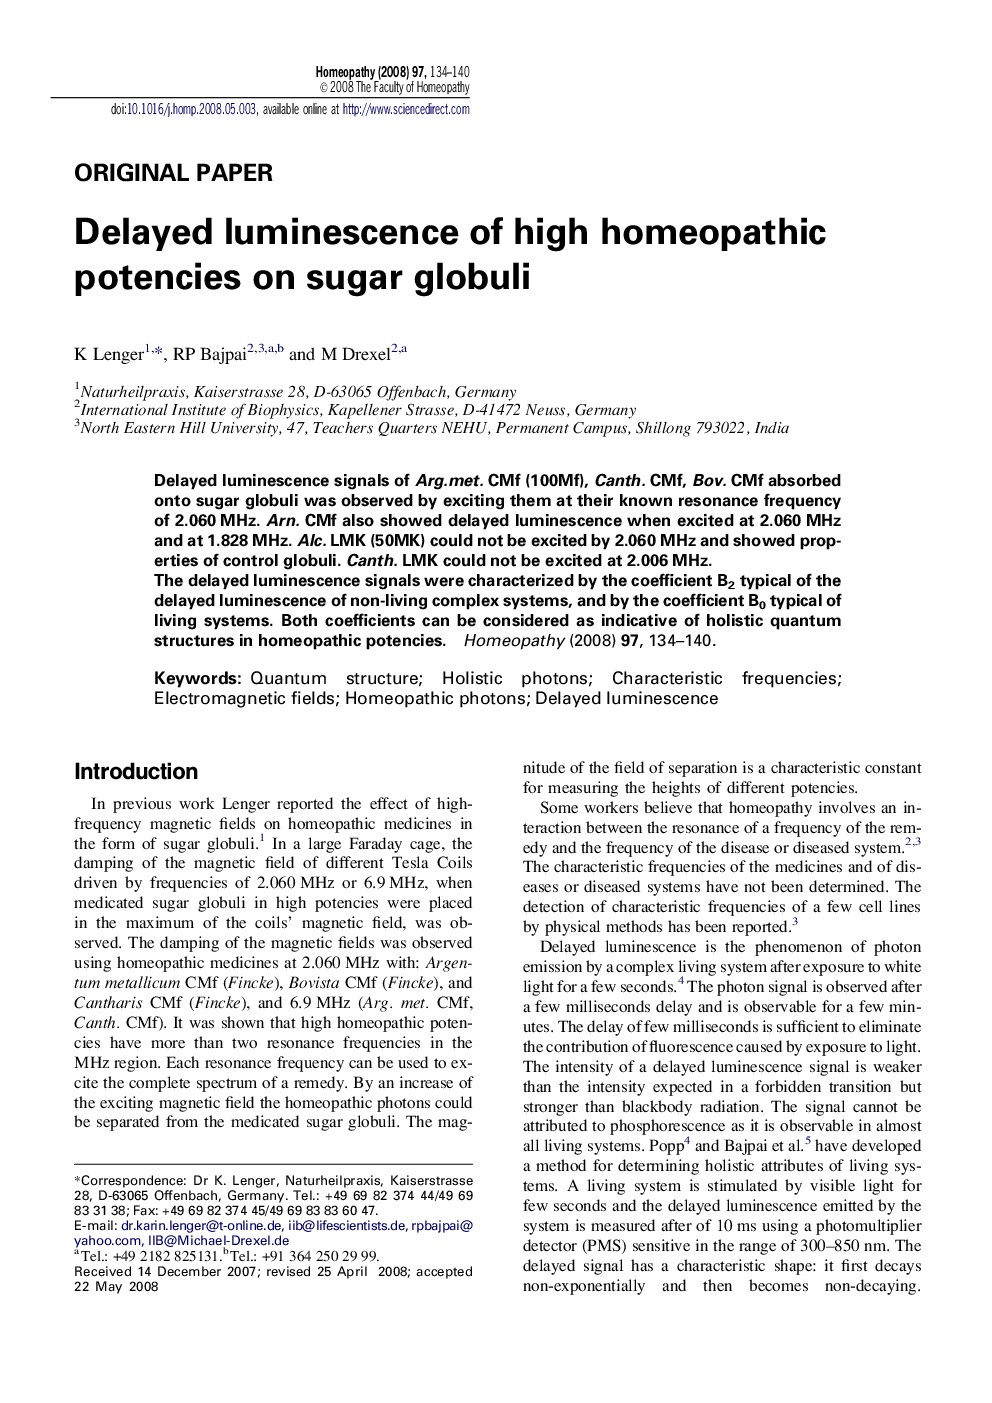 Delayed luminescence of high homeopathic potencies on sugar globuli